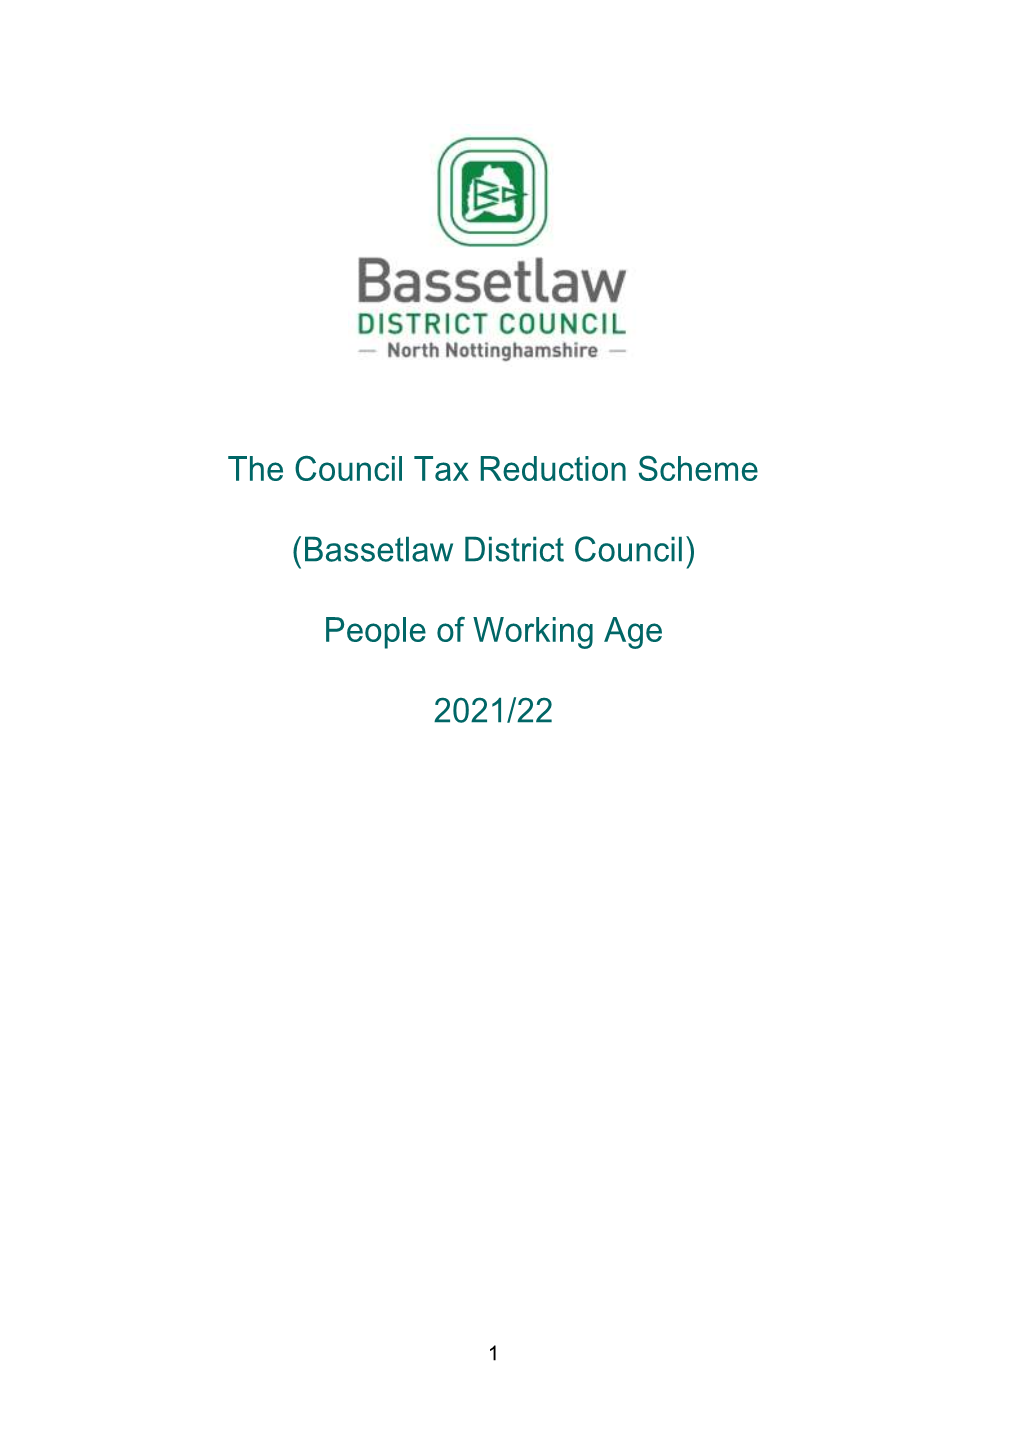 Council Tax Reduction Scheme Working